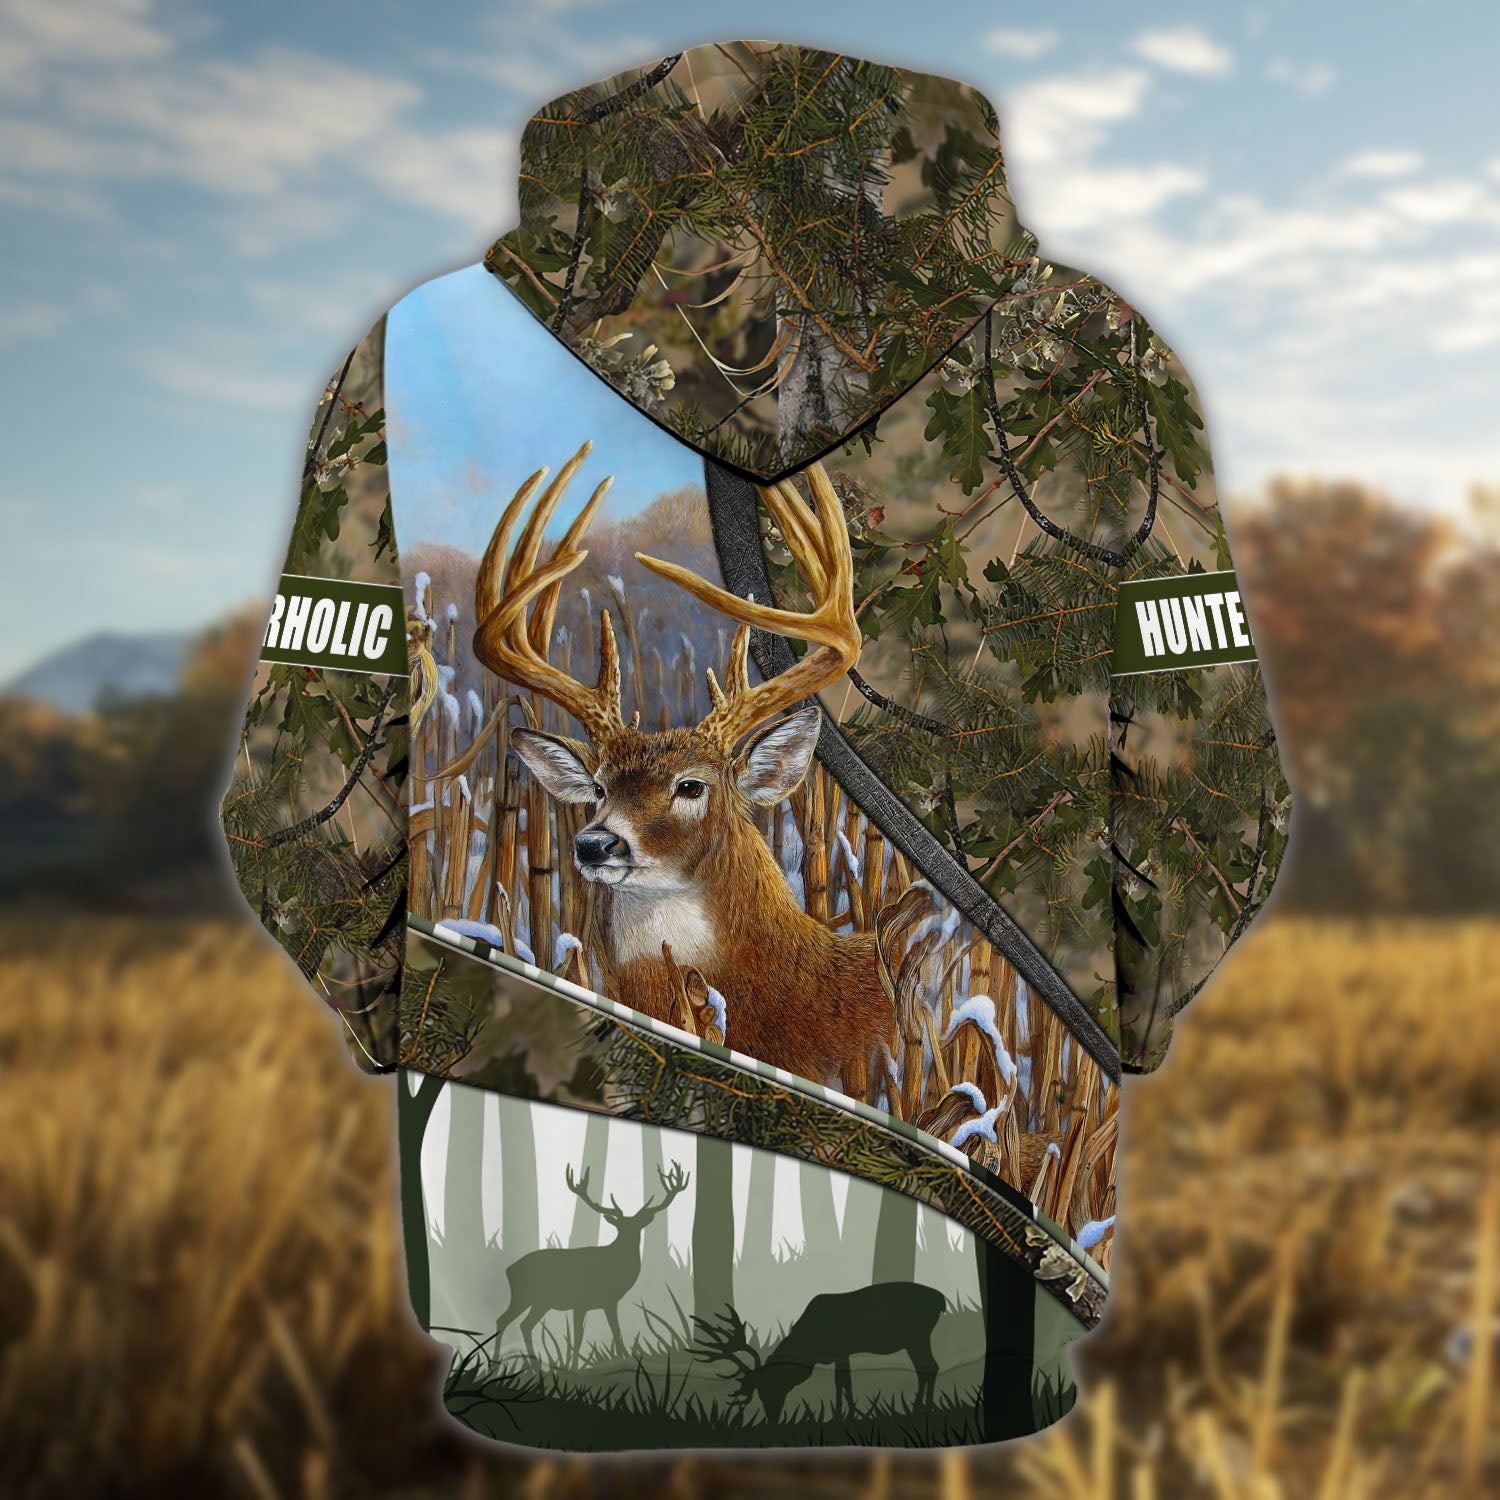 Hunting - Personalized Name 3D Zipper hoodie - TT99-691